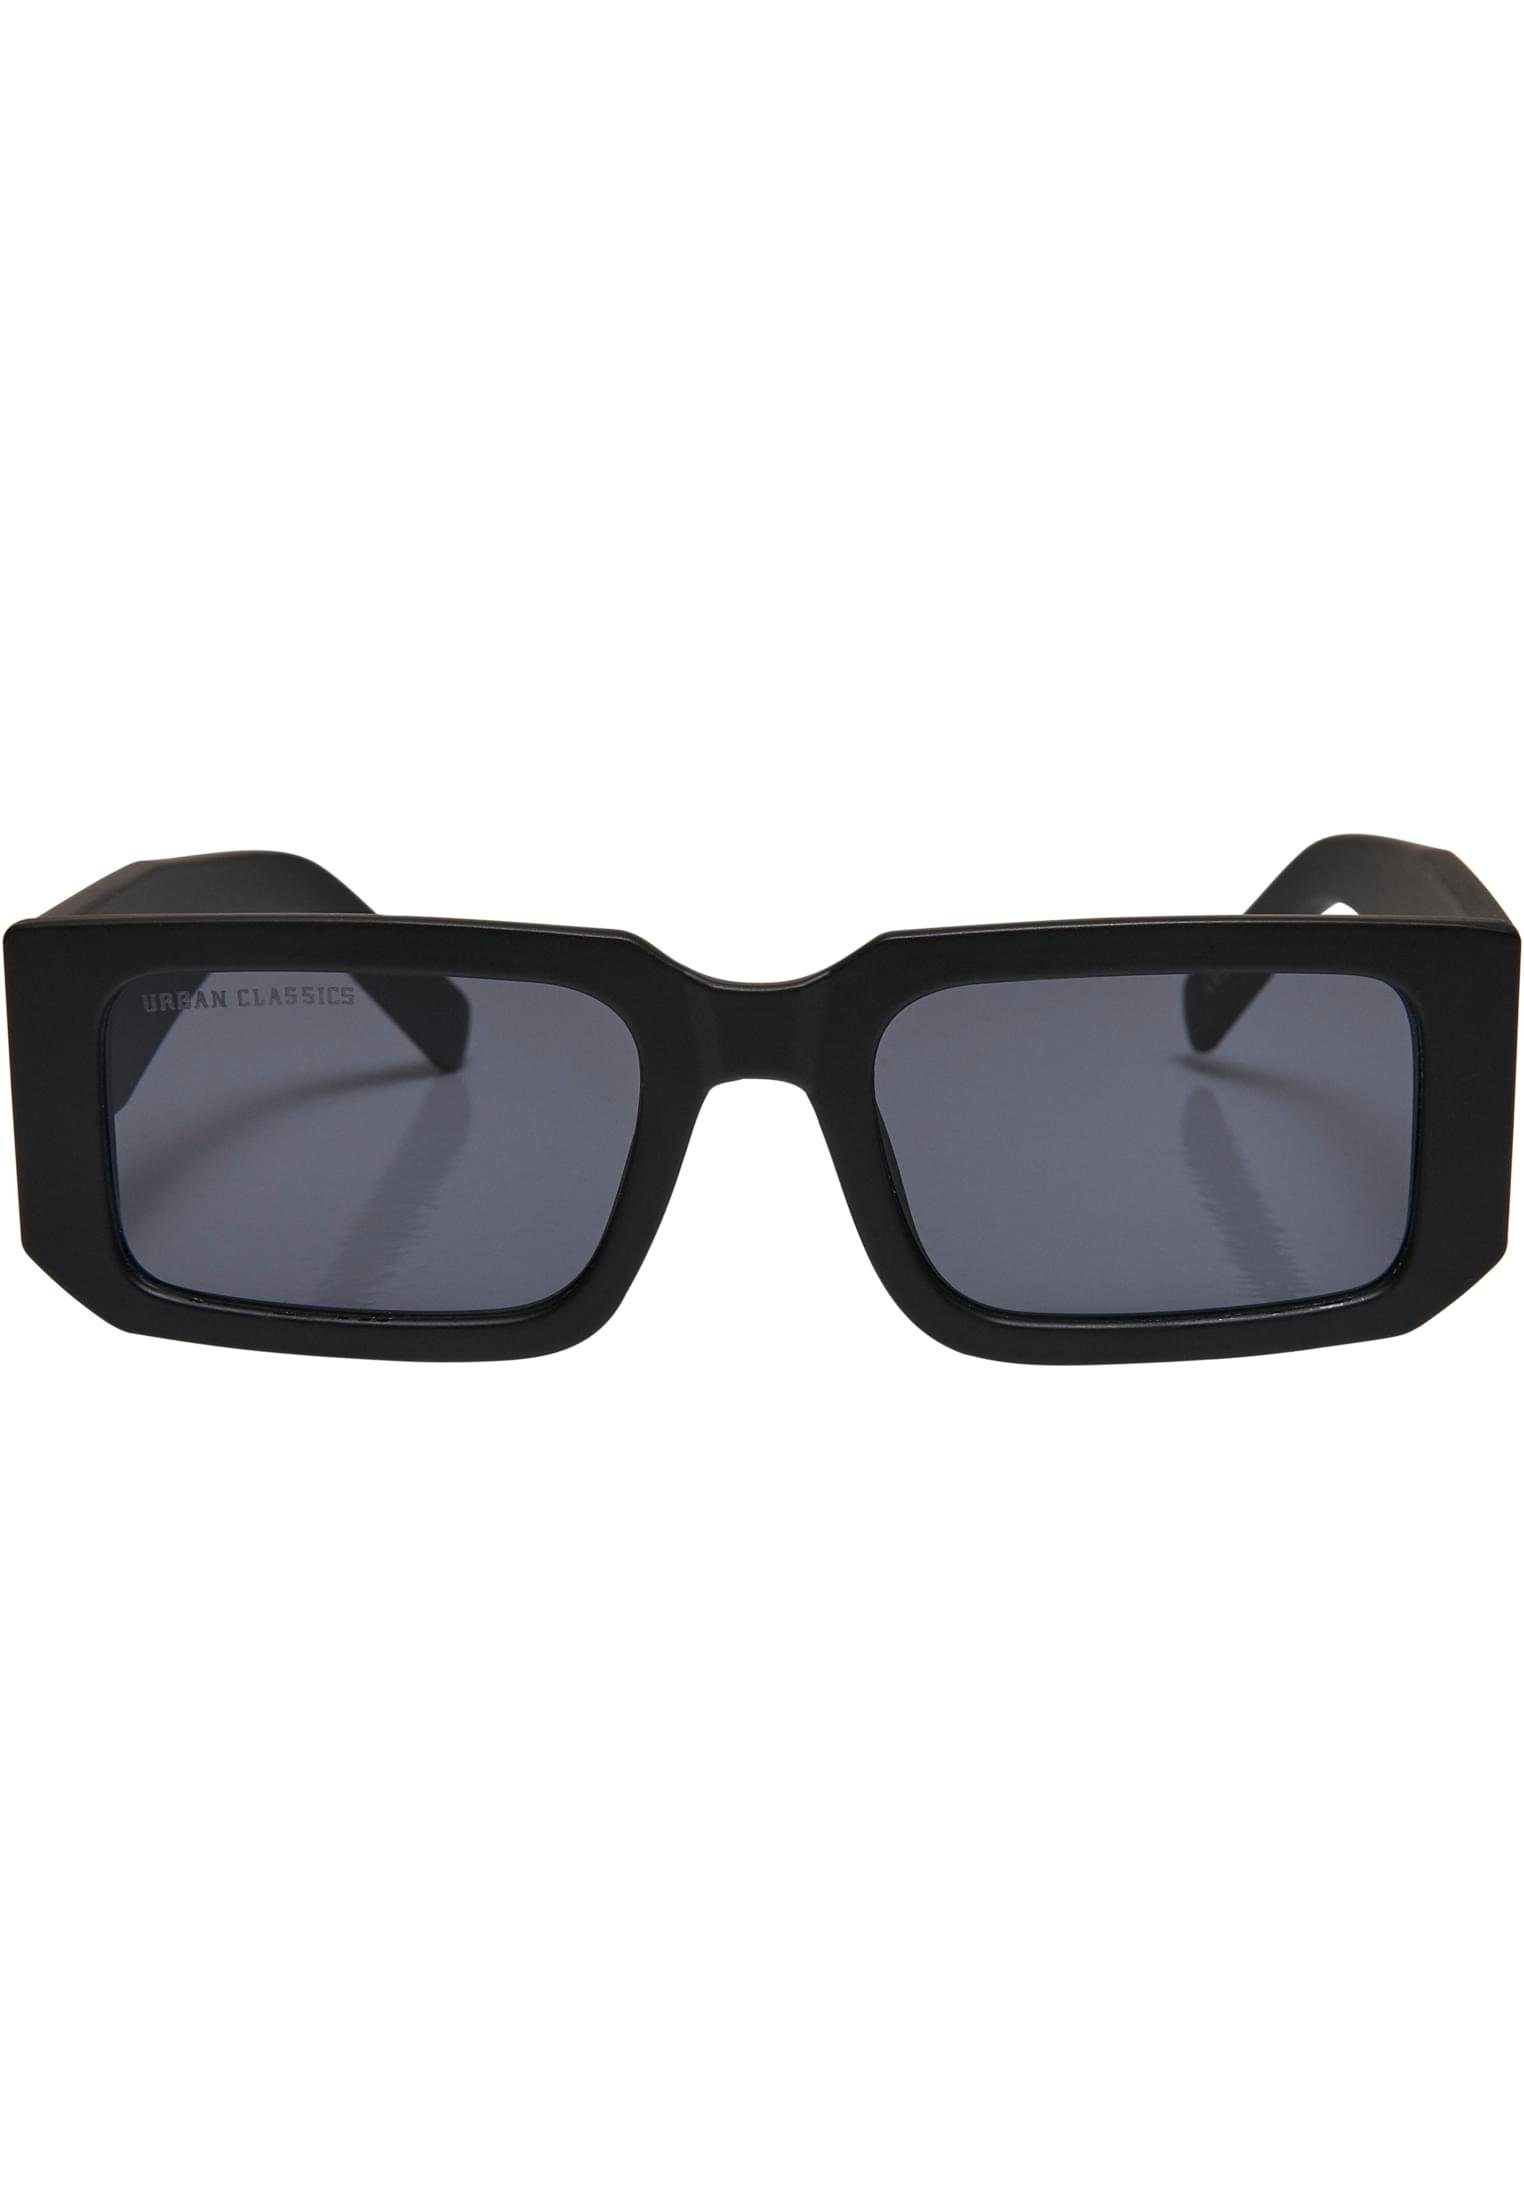 Sonnenbrille Unisex Sunglasses Helsinki CLASSICS black URBAN